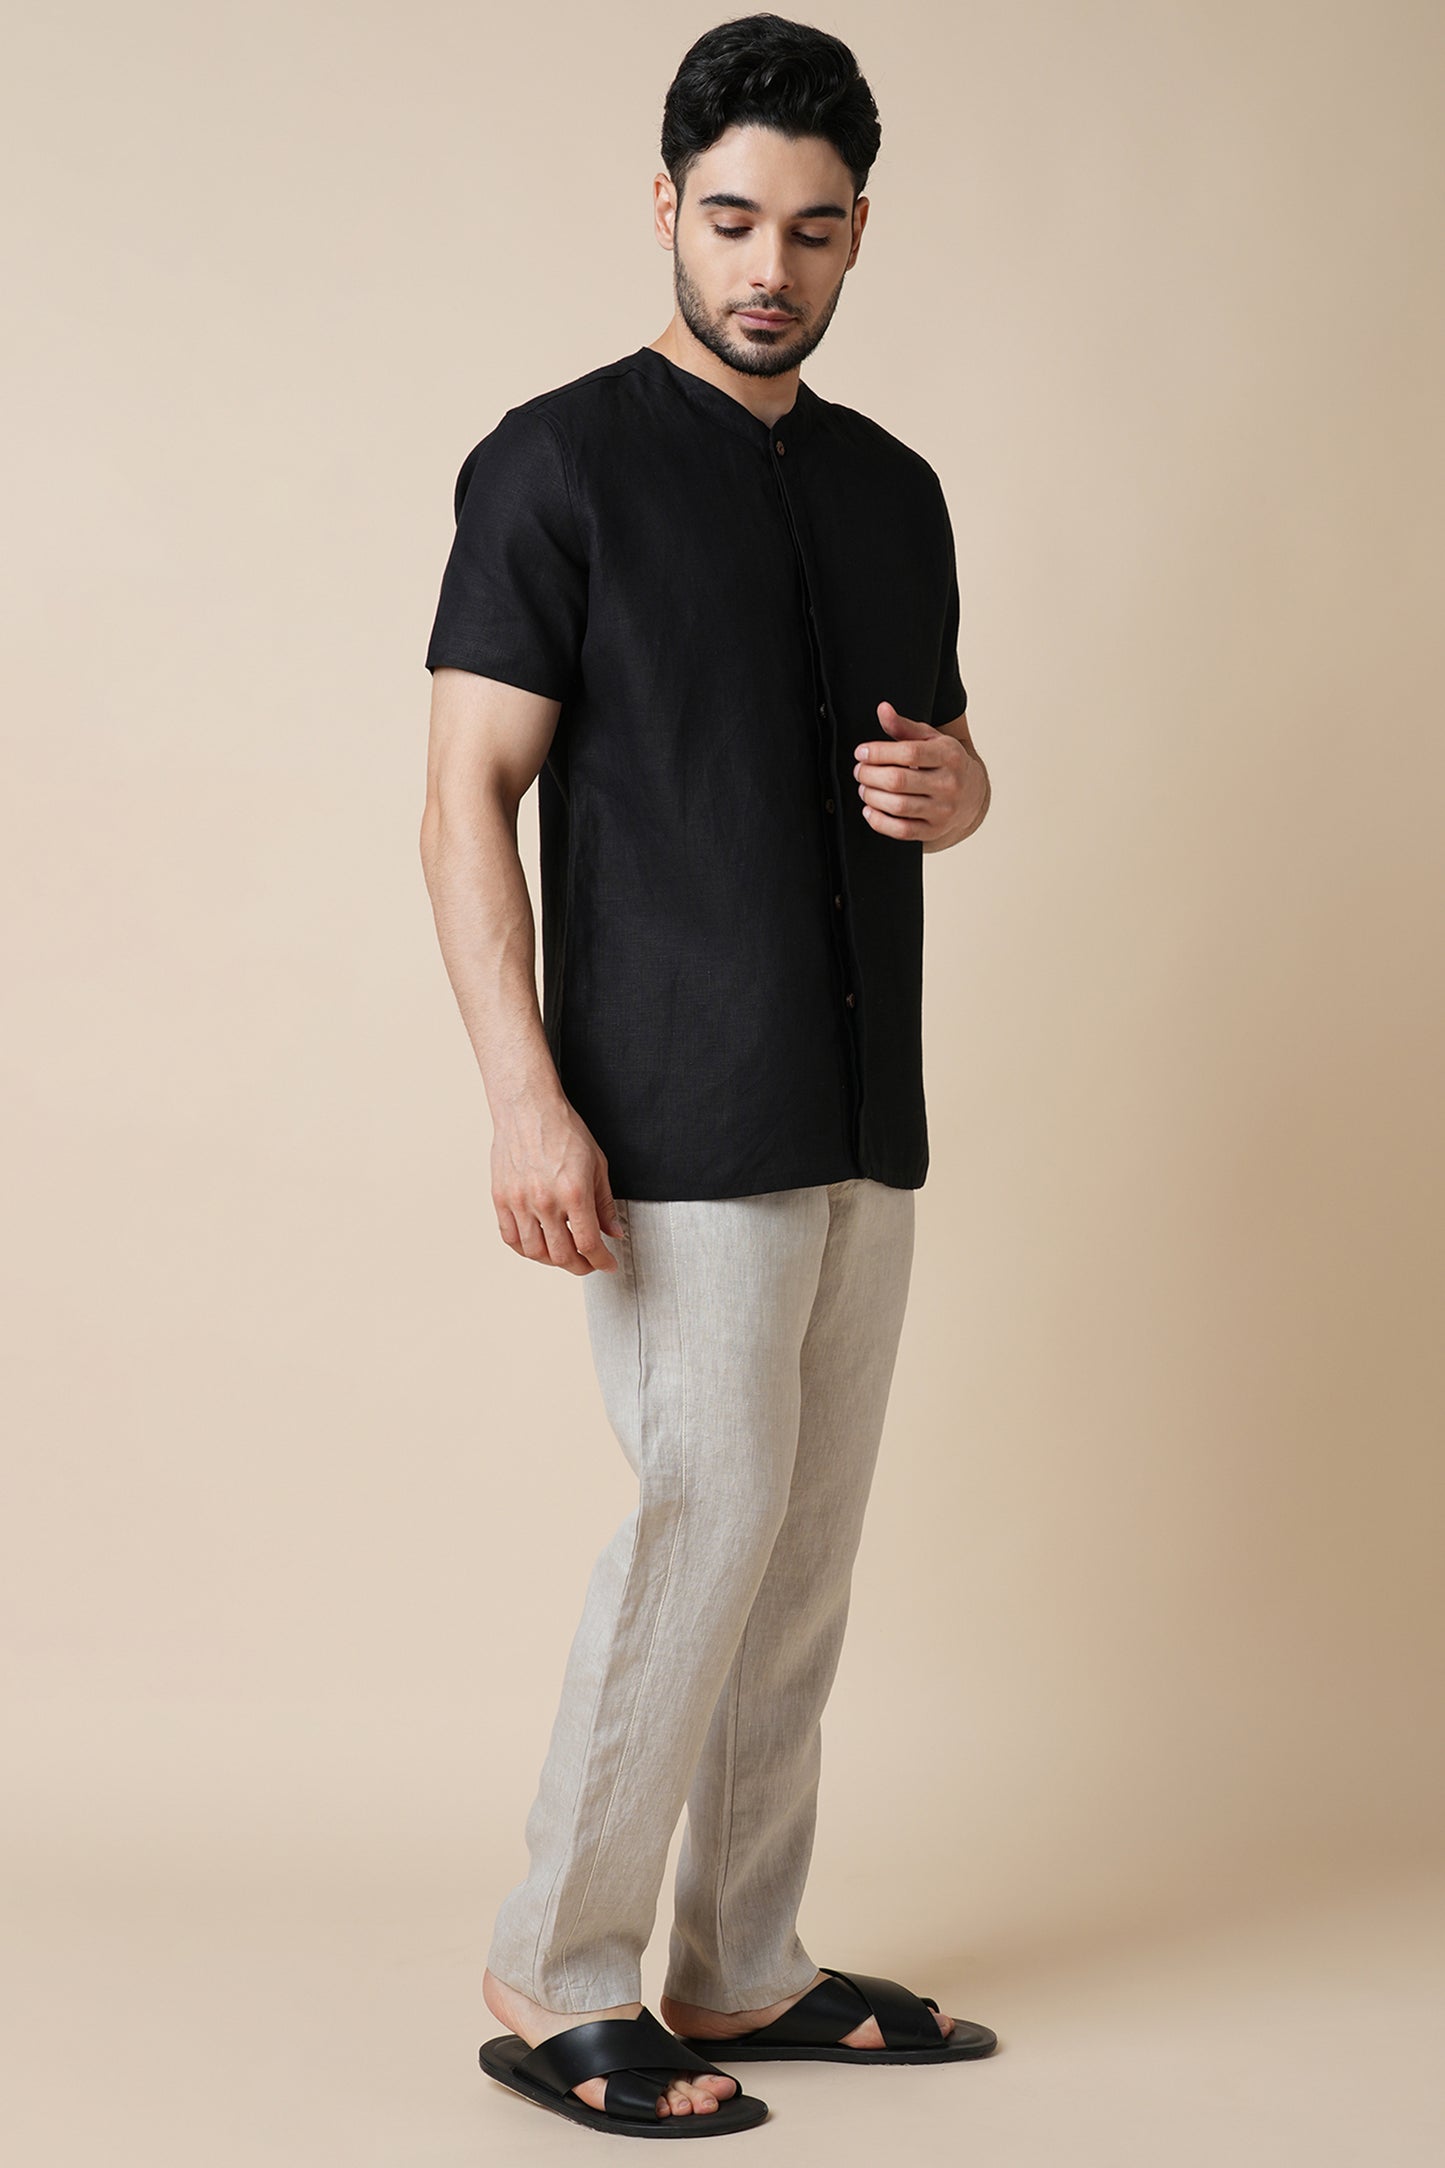 Set of 2: Placibo Shirt & Cedar Pants - Black and Oatmeal